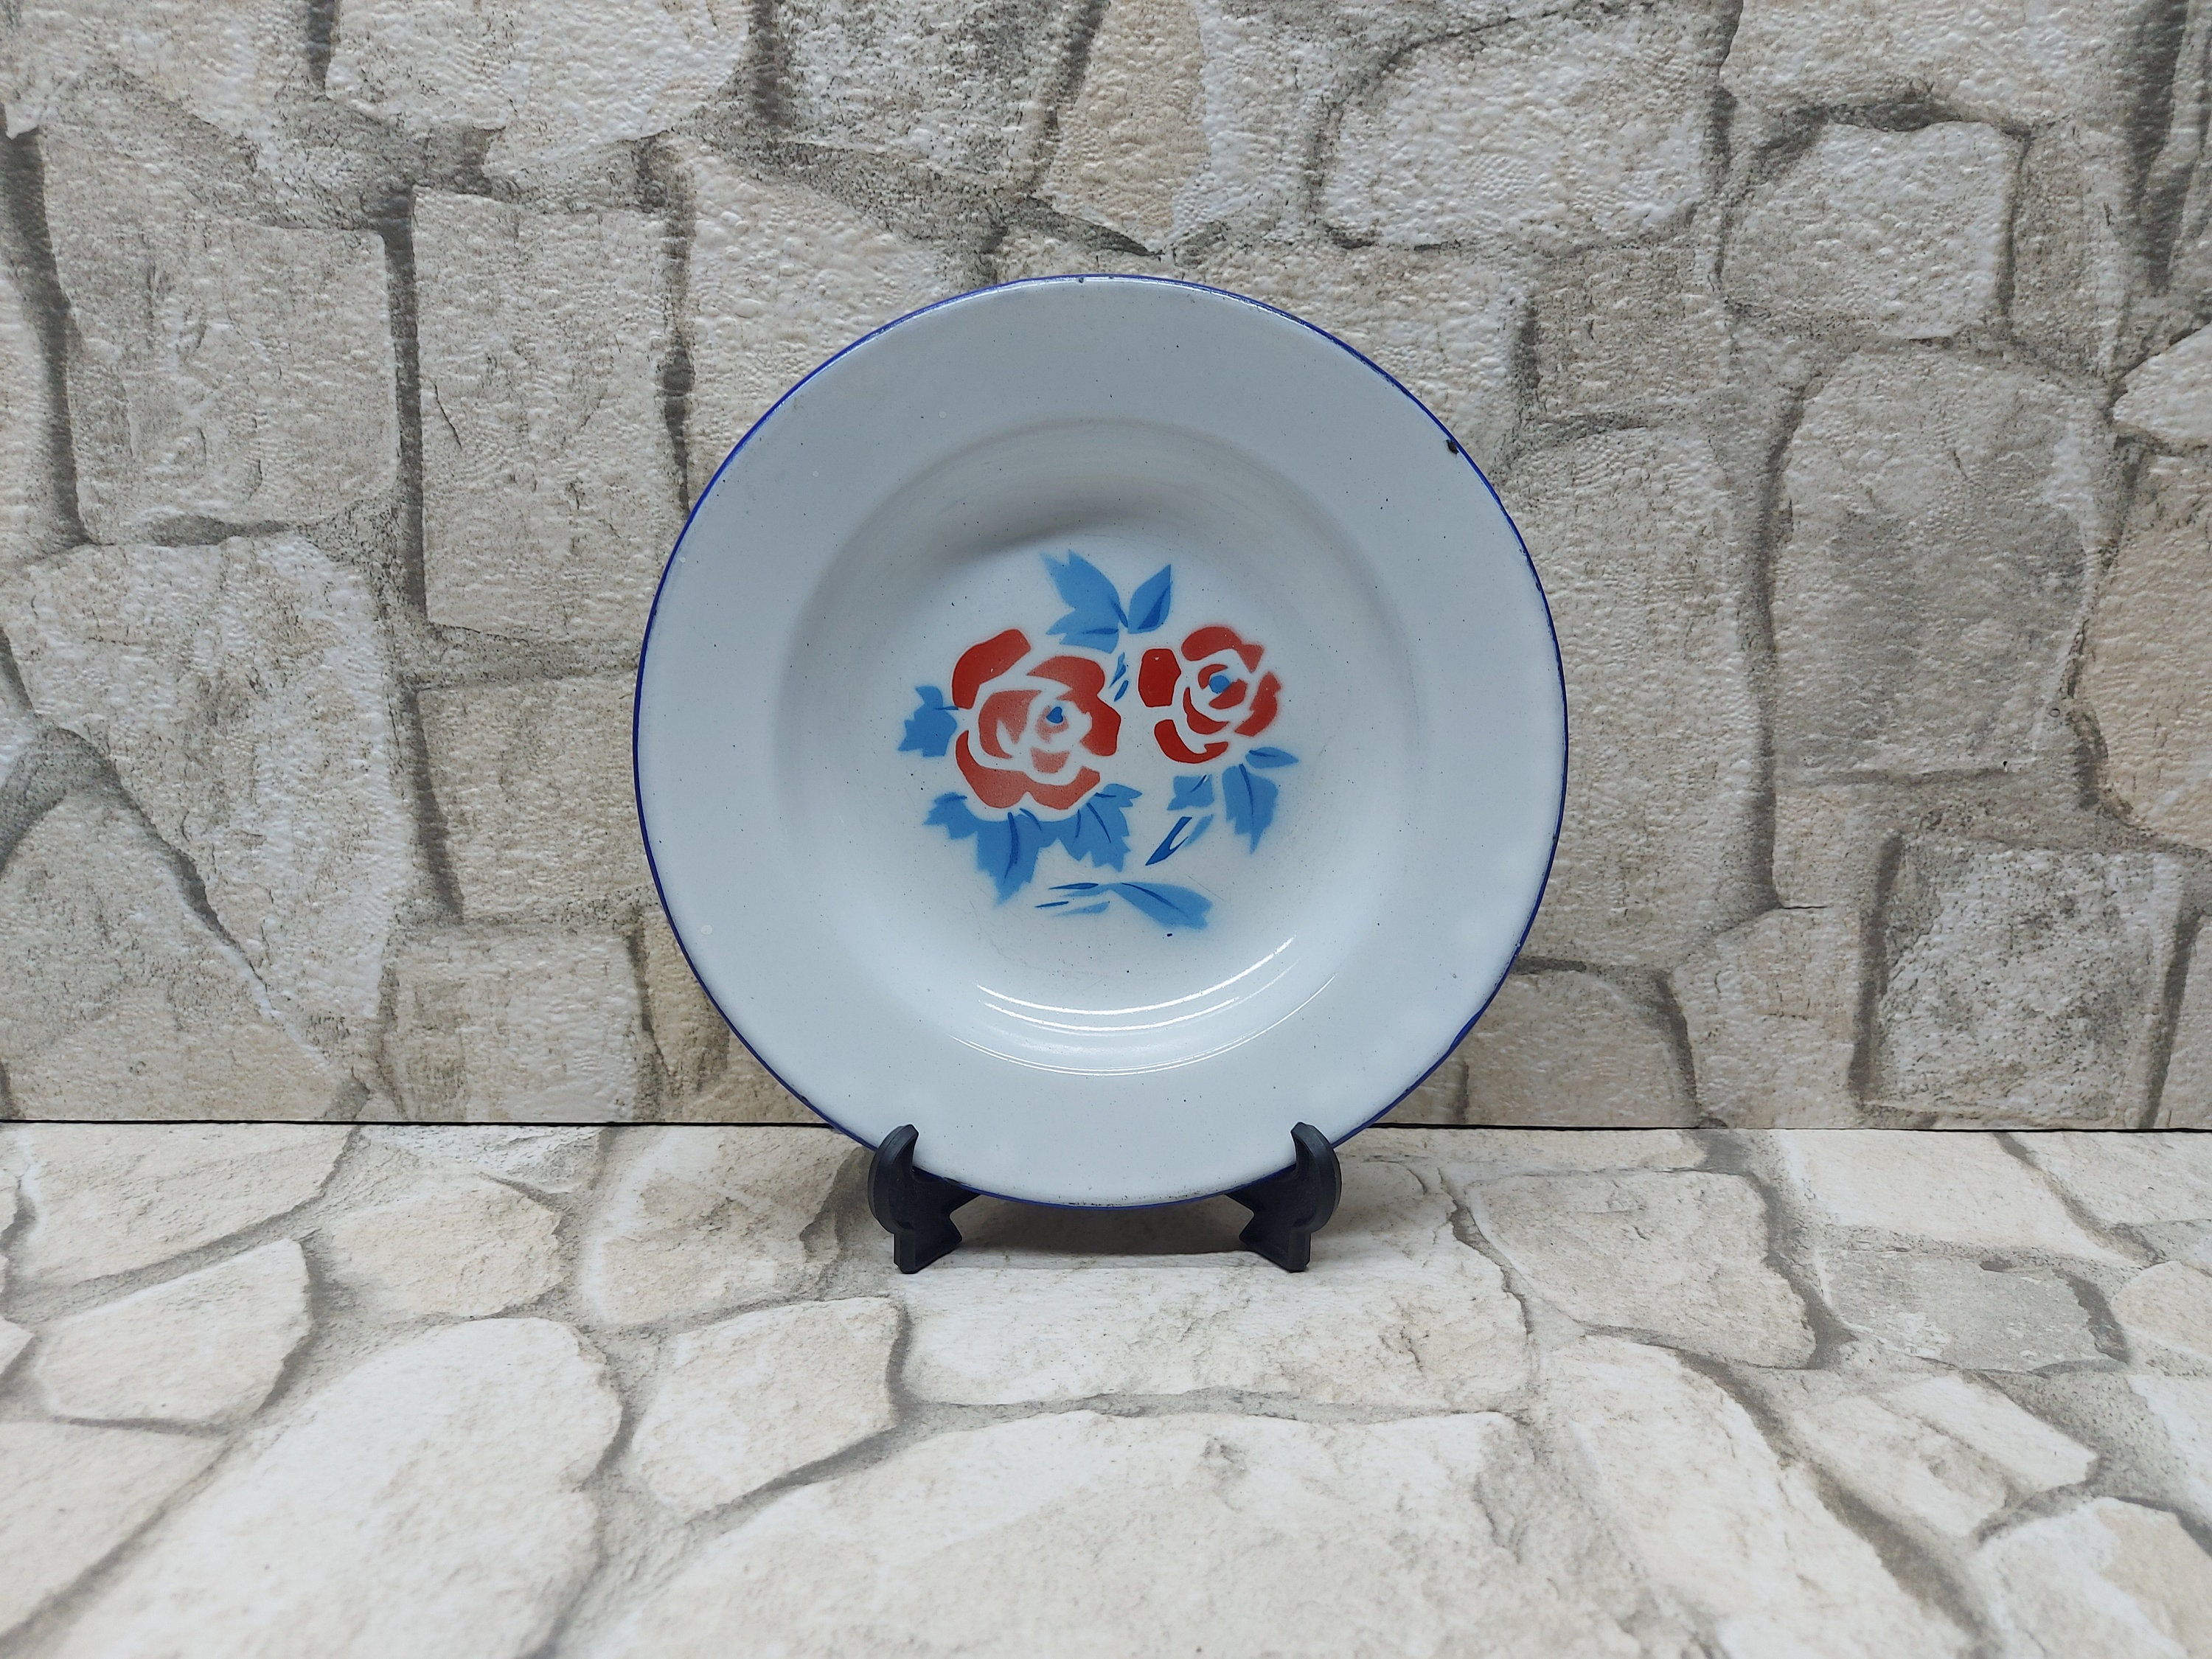 Vintage Enamel Plates, Set of 3, White Enameled Plate With Blue Rim, Metal  Plate, Country Farmhouse, Vintage Metalware, 